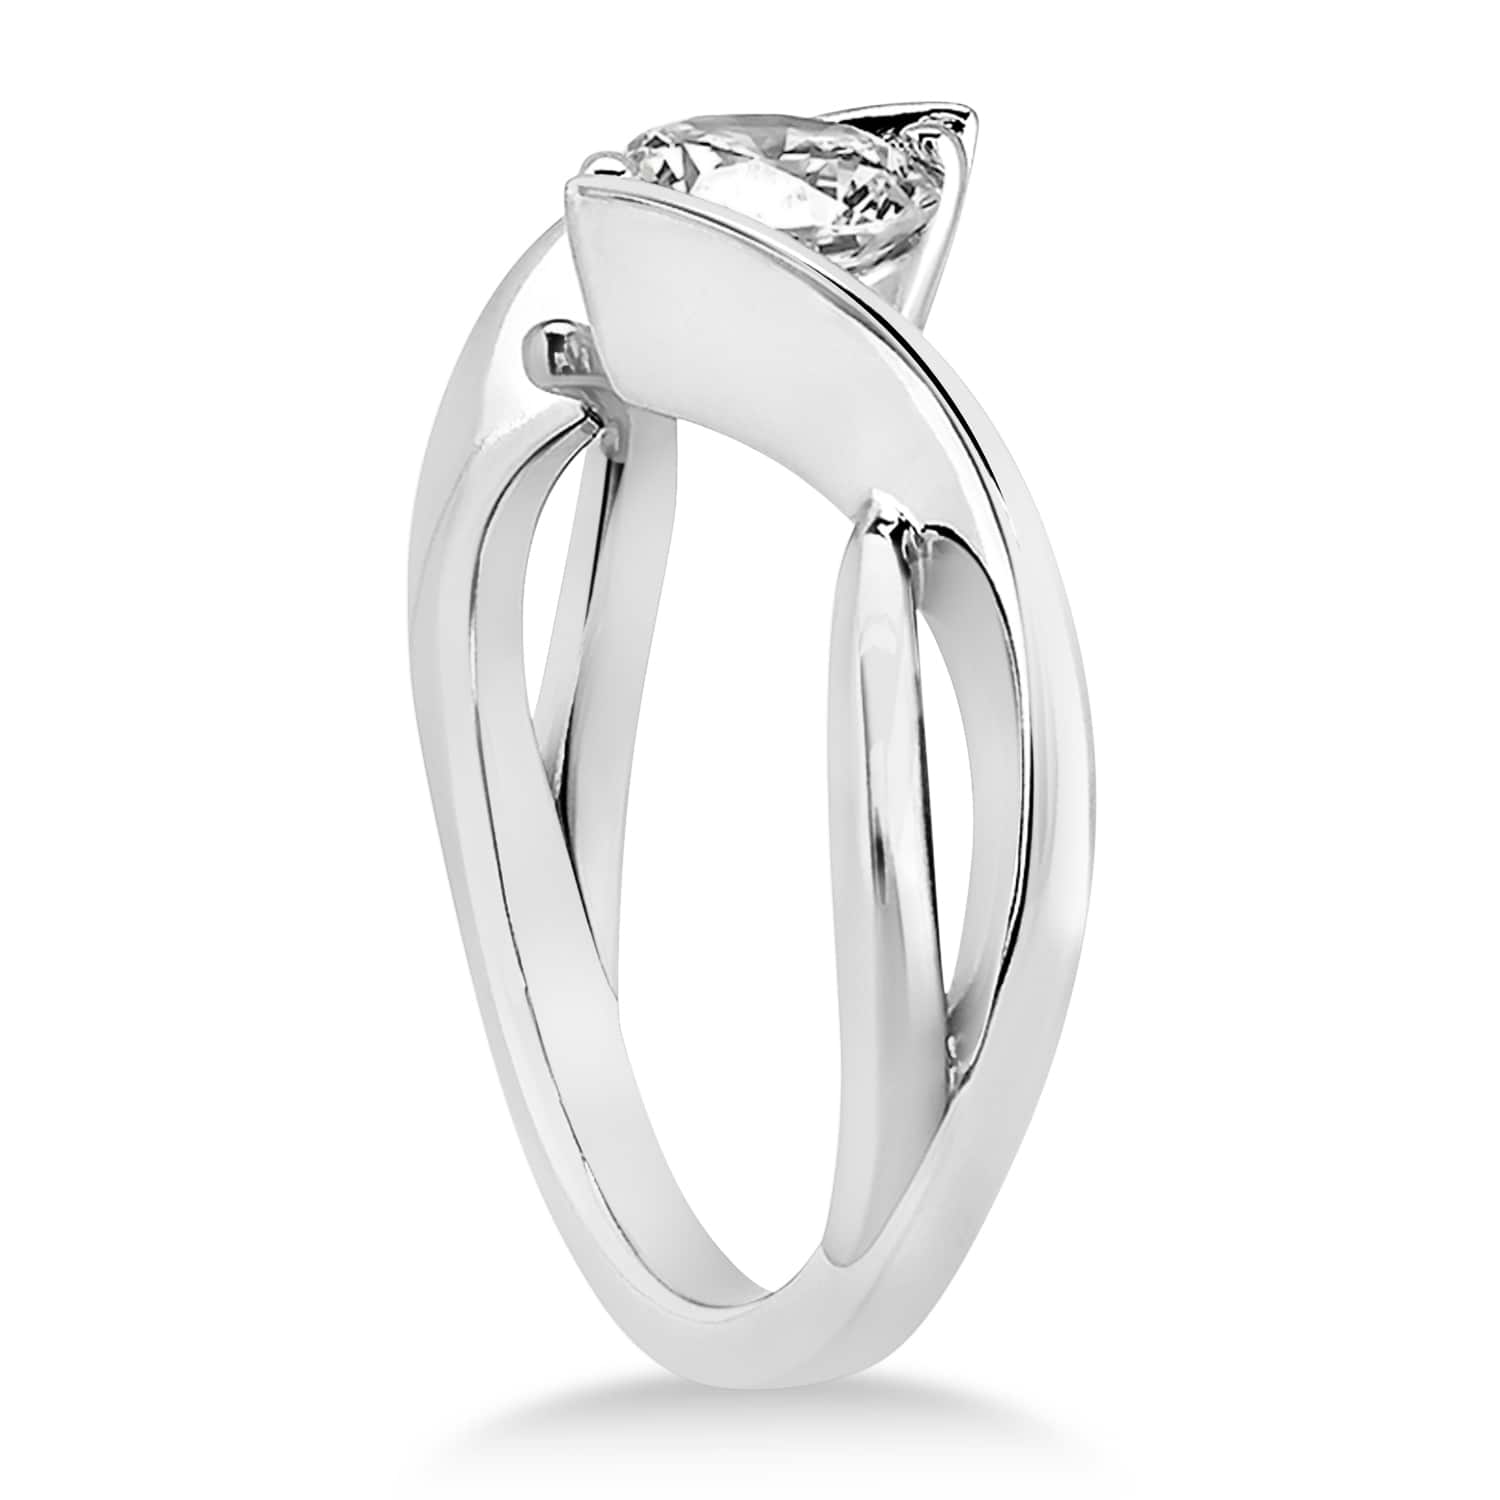 Diamond Twisted Engagement Ring 14k White Gold